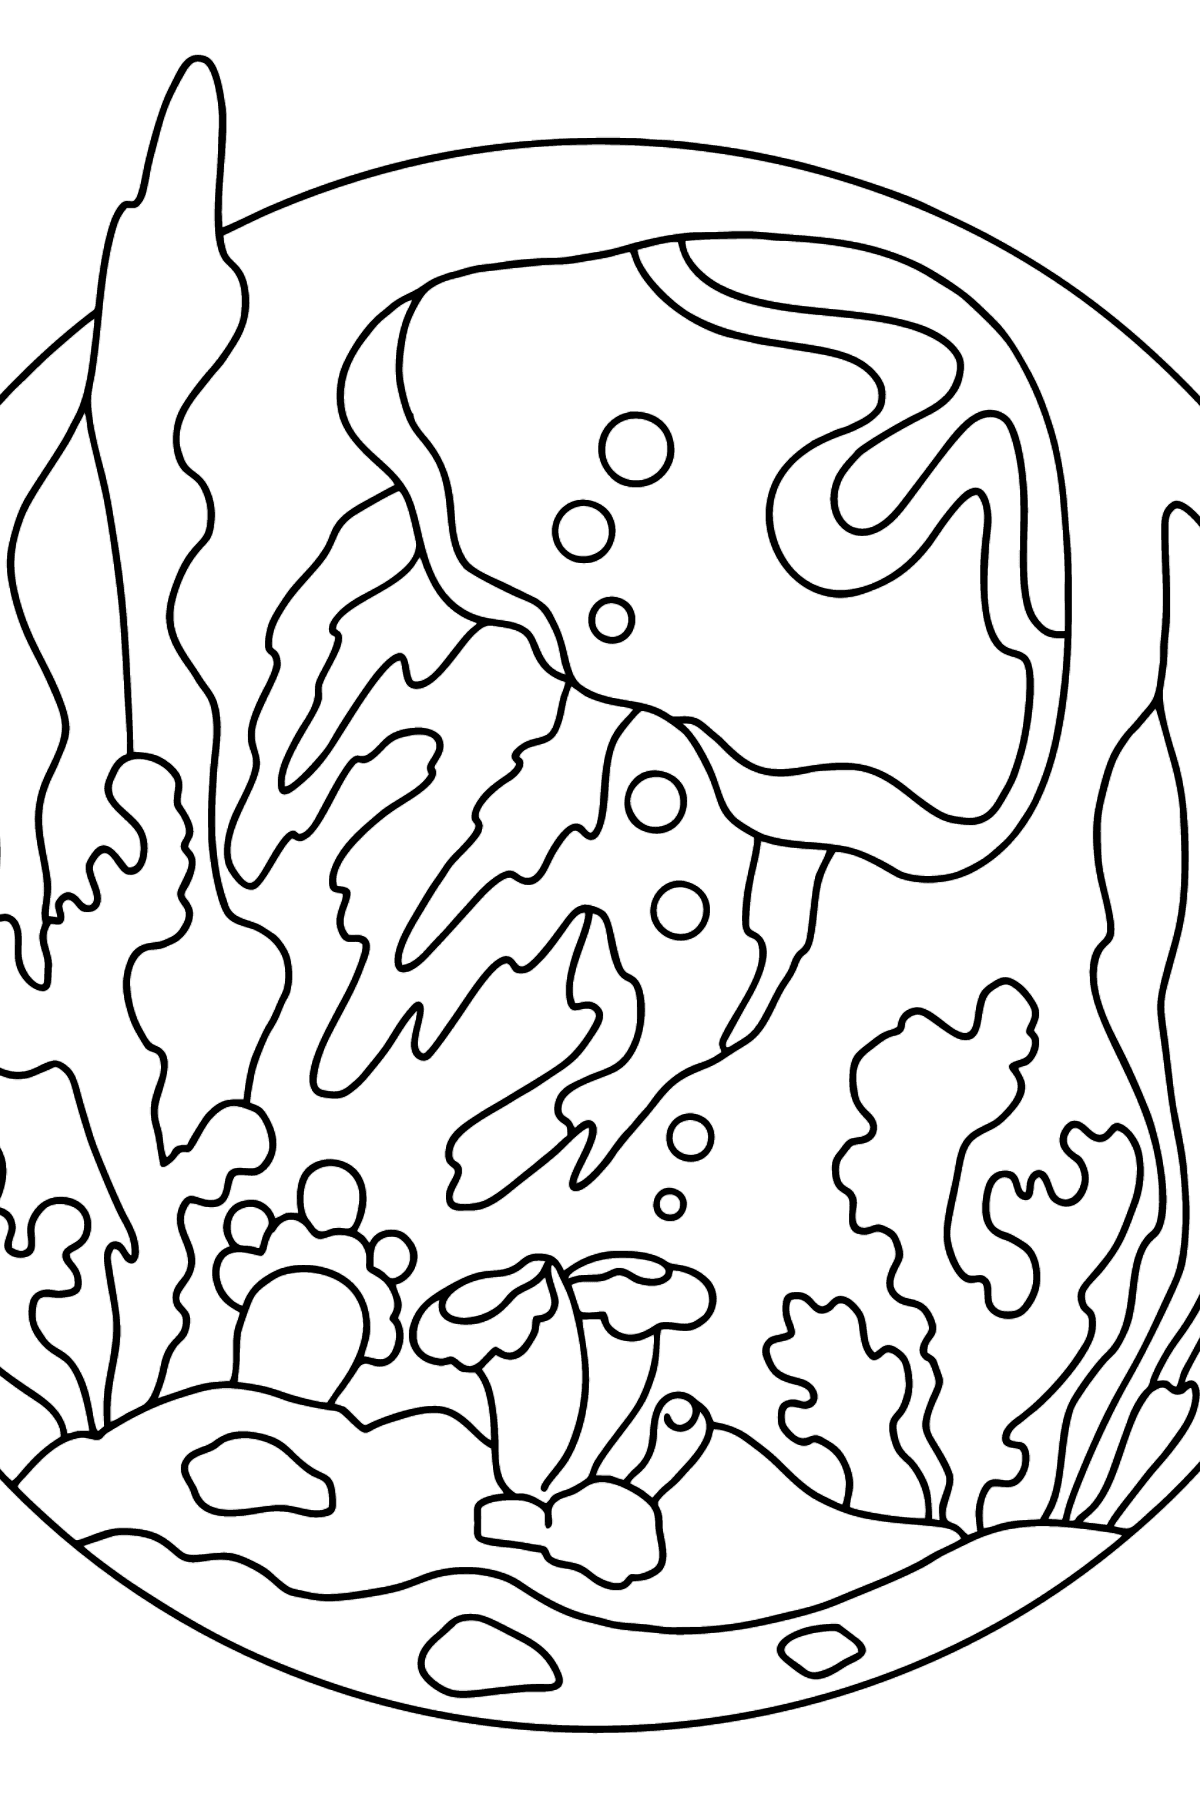 Медуза Раскраска - Картинки для Детей